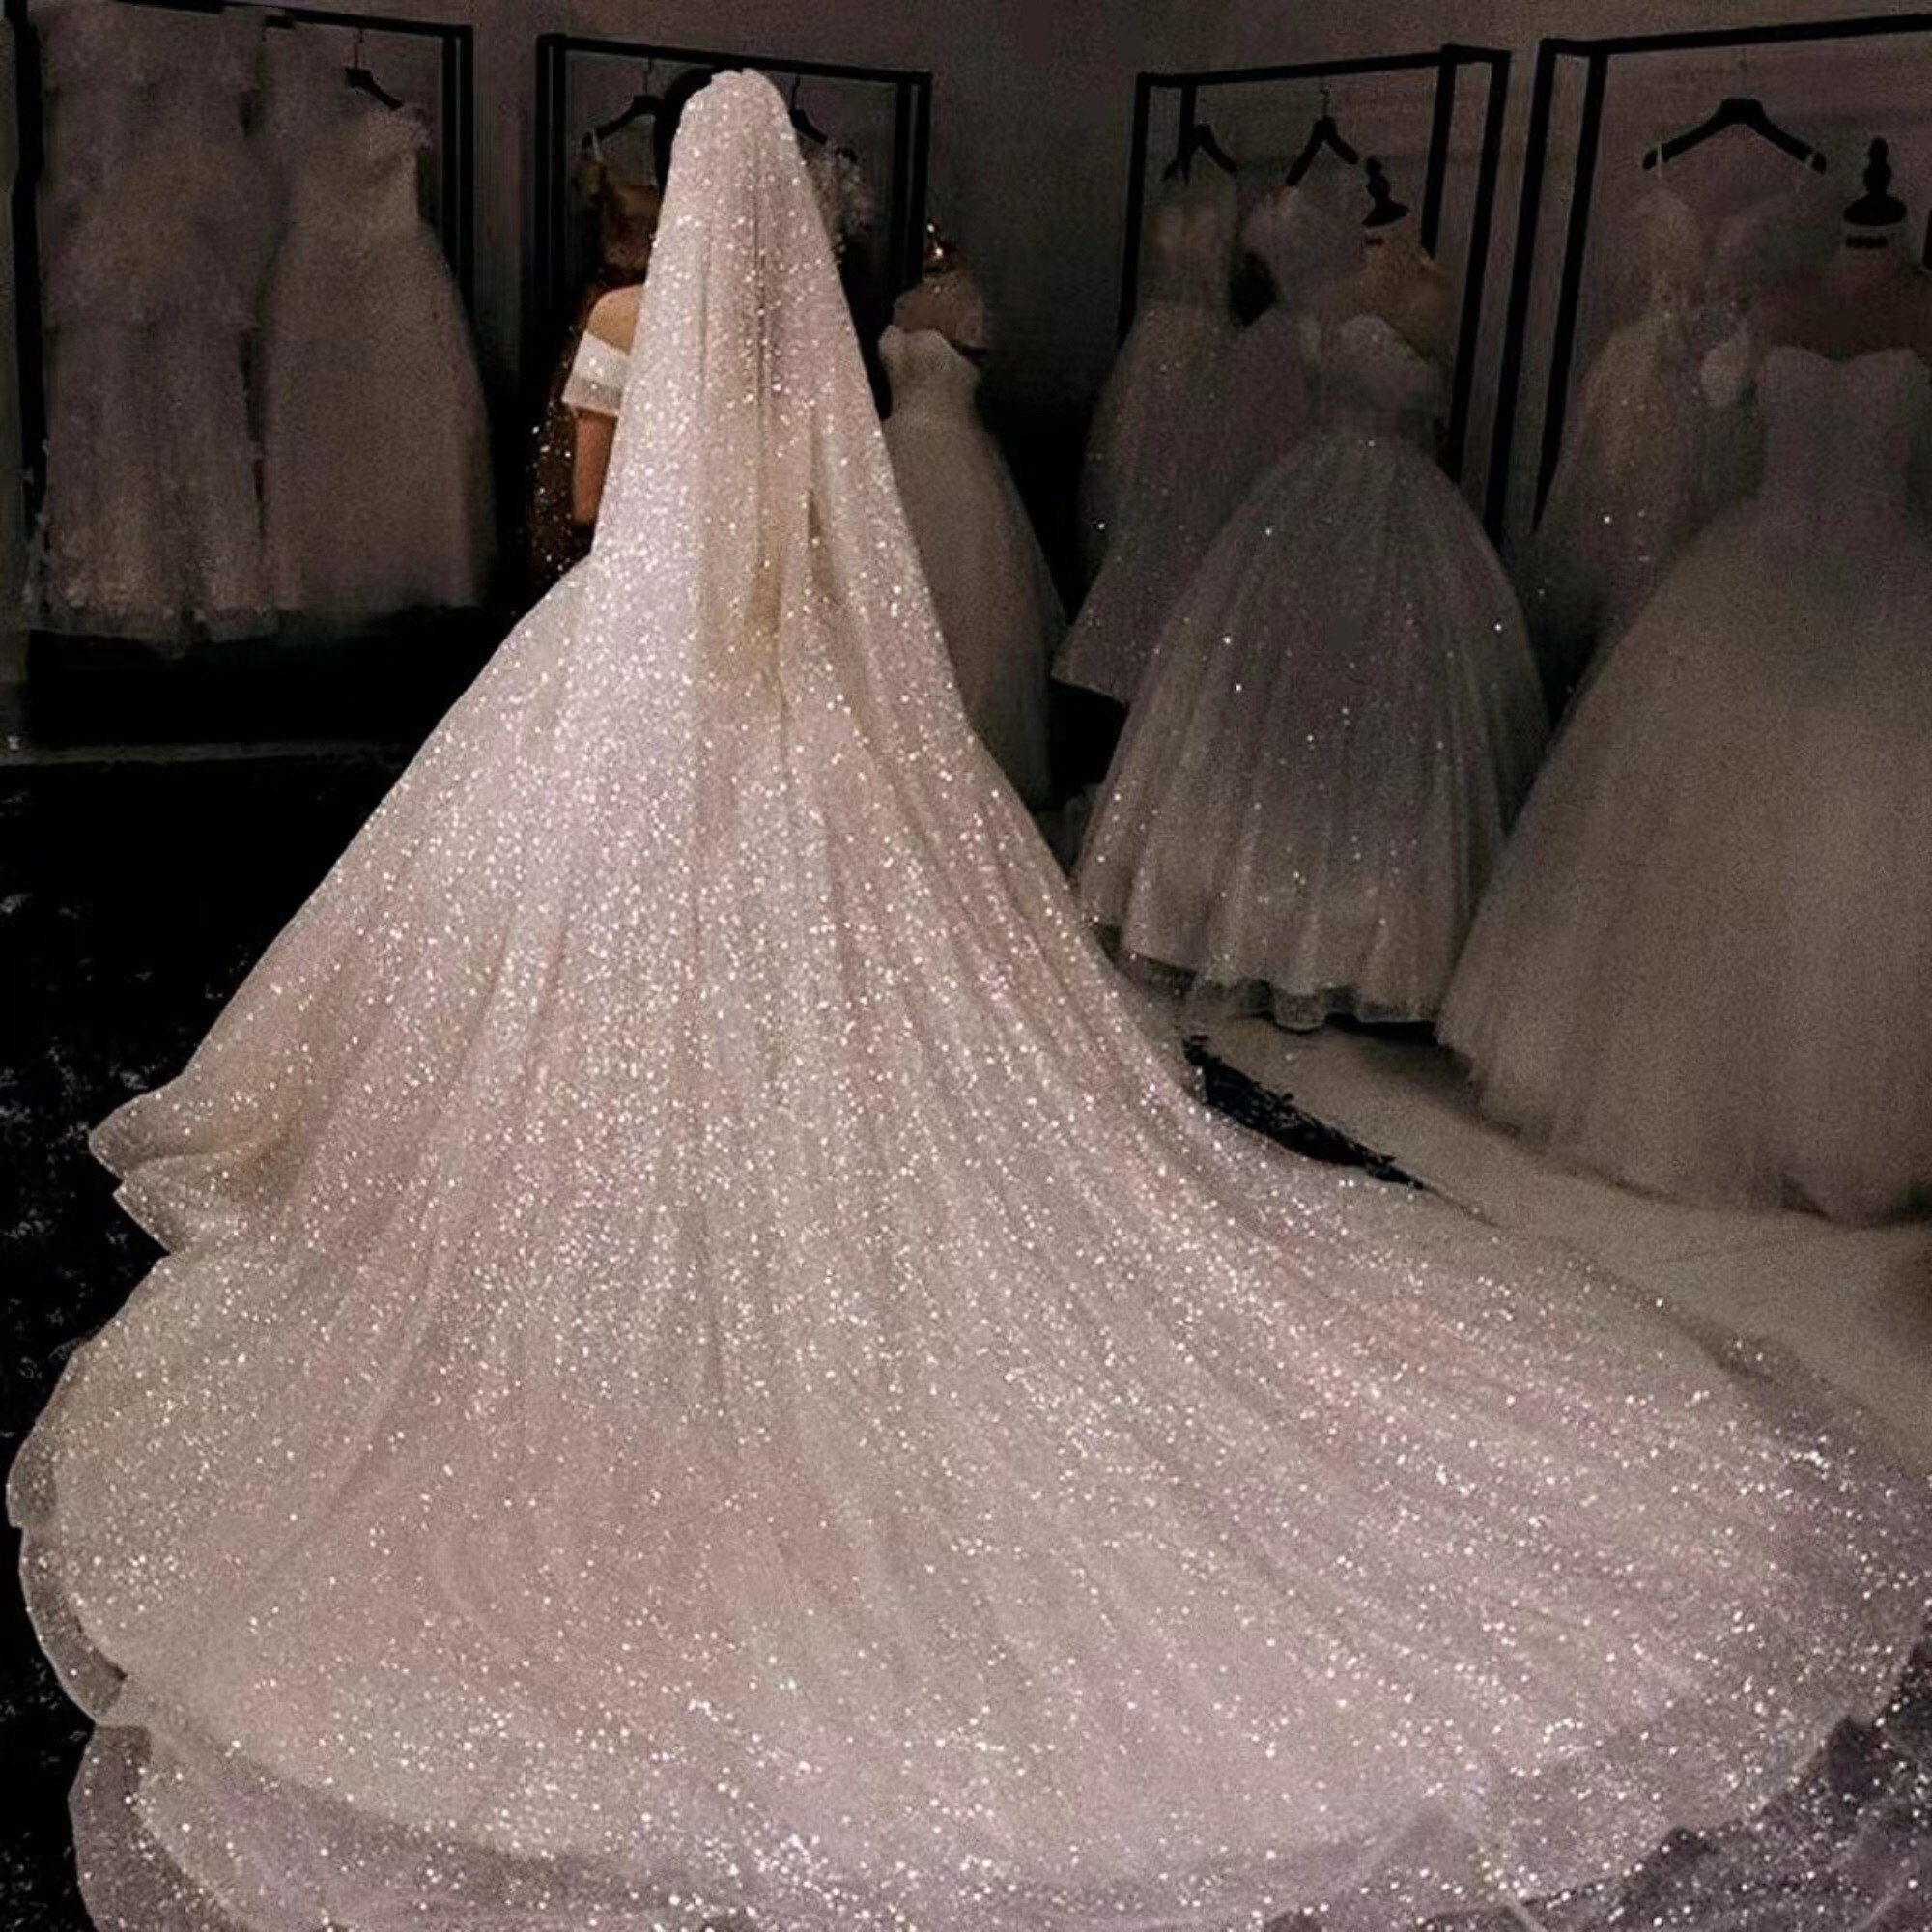 Royal Wedding Dress With Veil,ball Gown Wedding Dress,princess